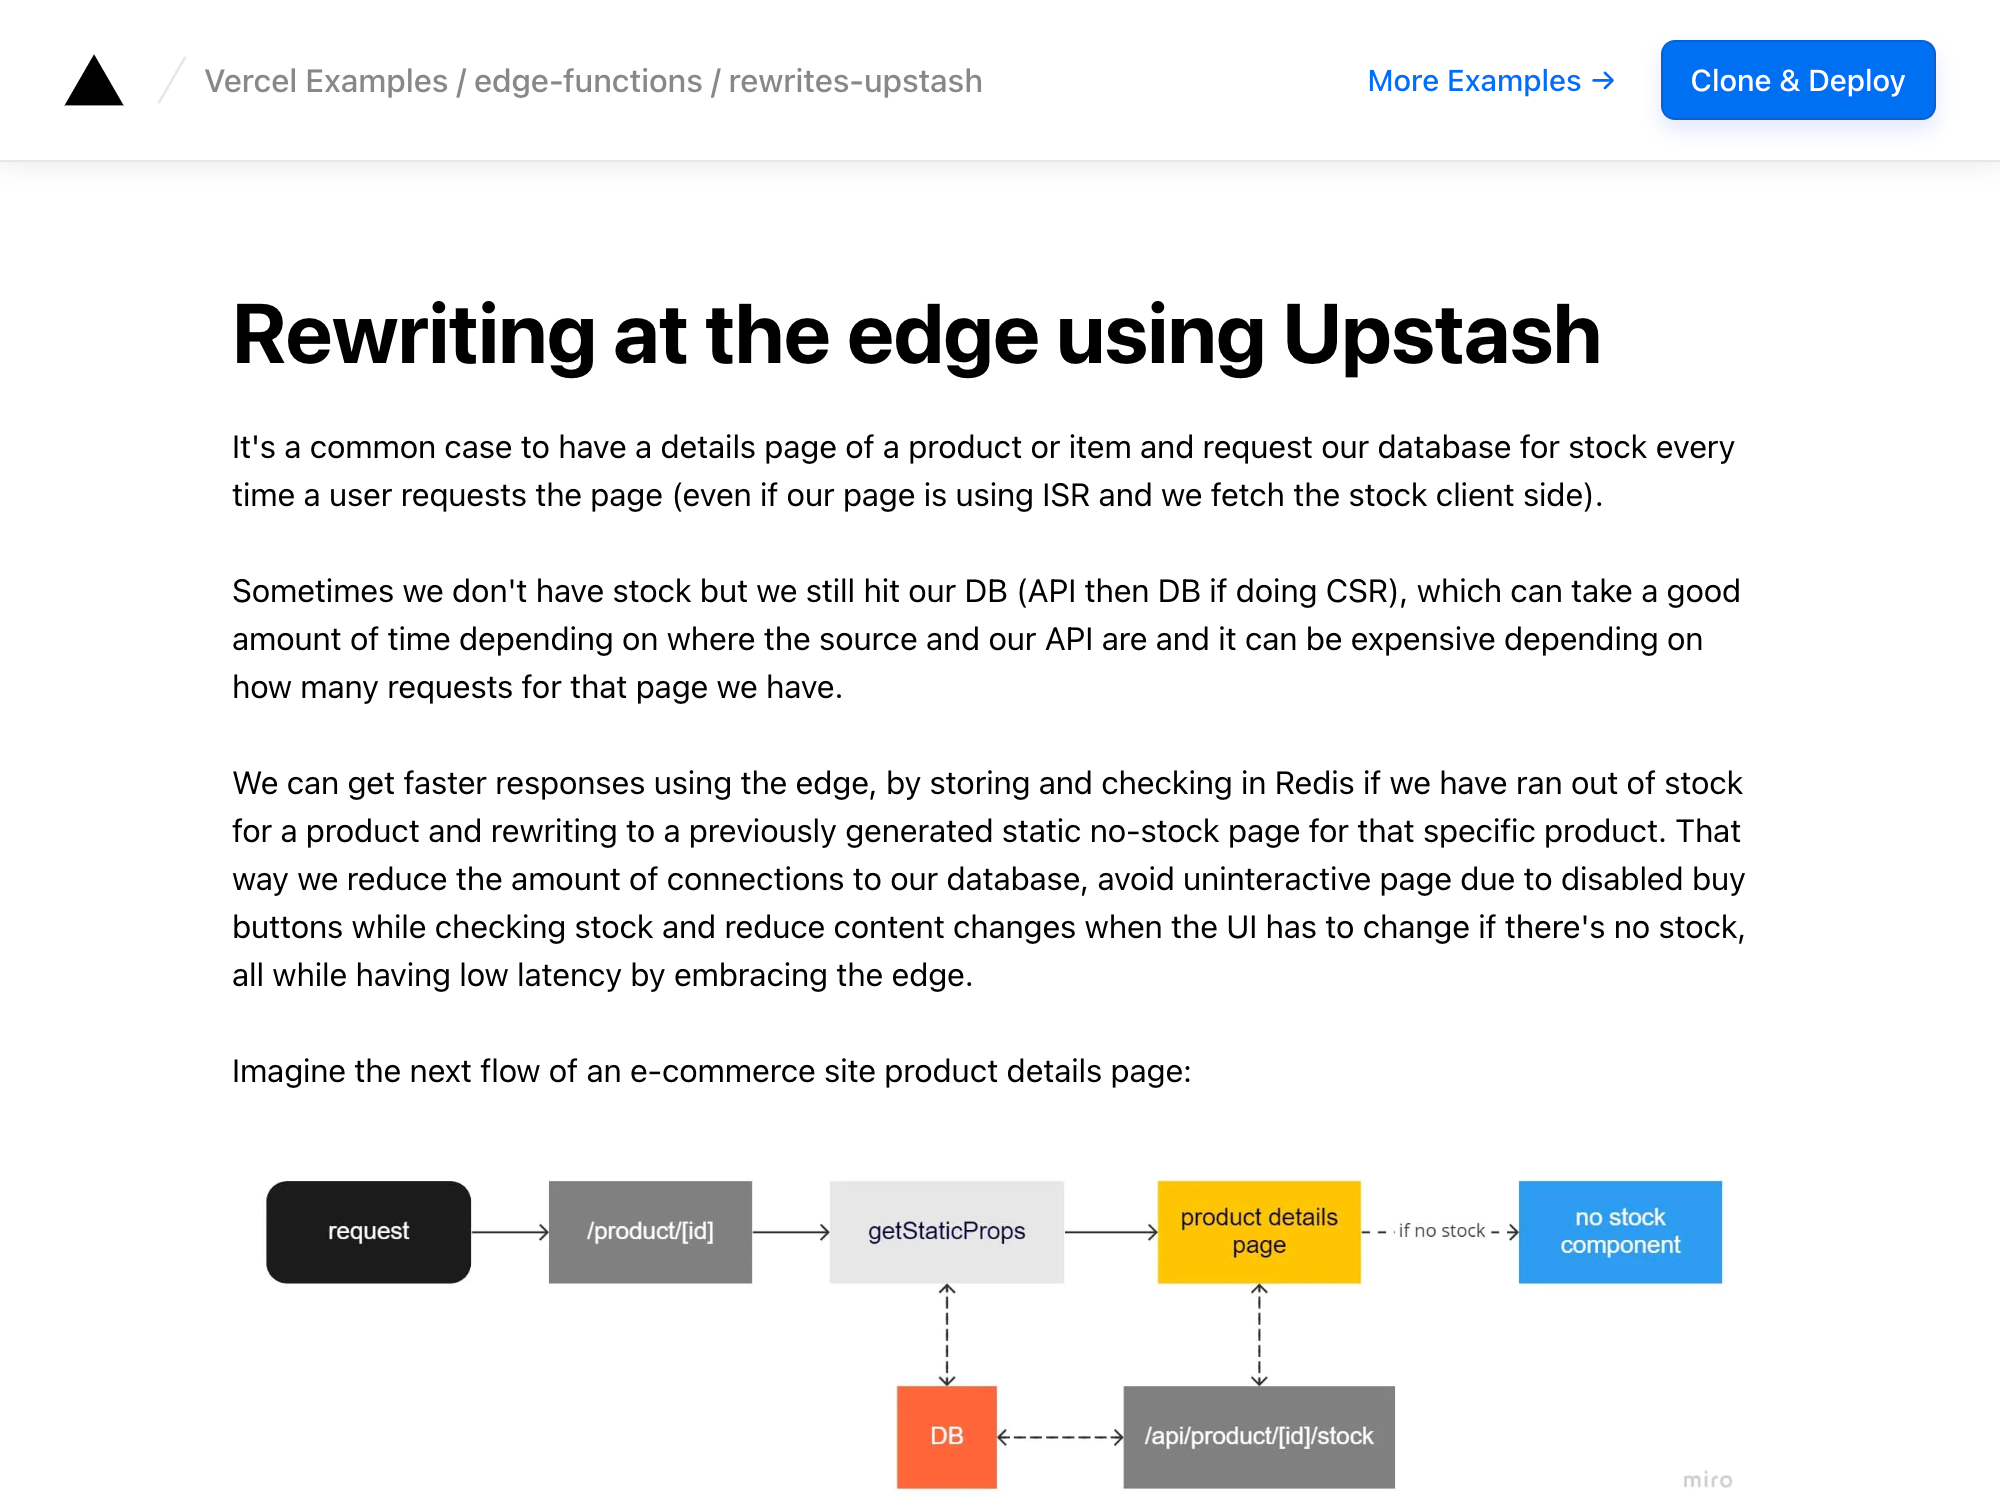 Rewriting at the Edge using Upstash